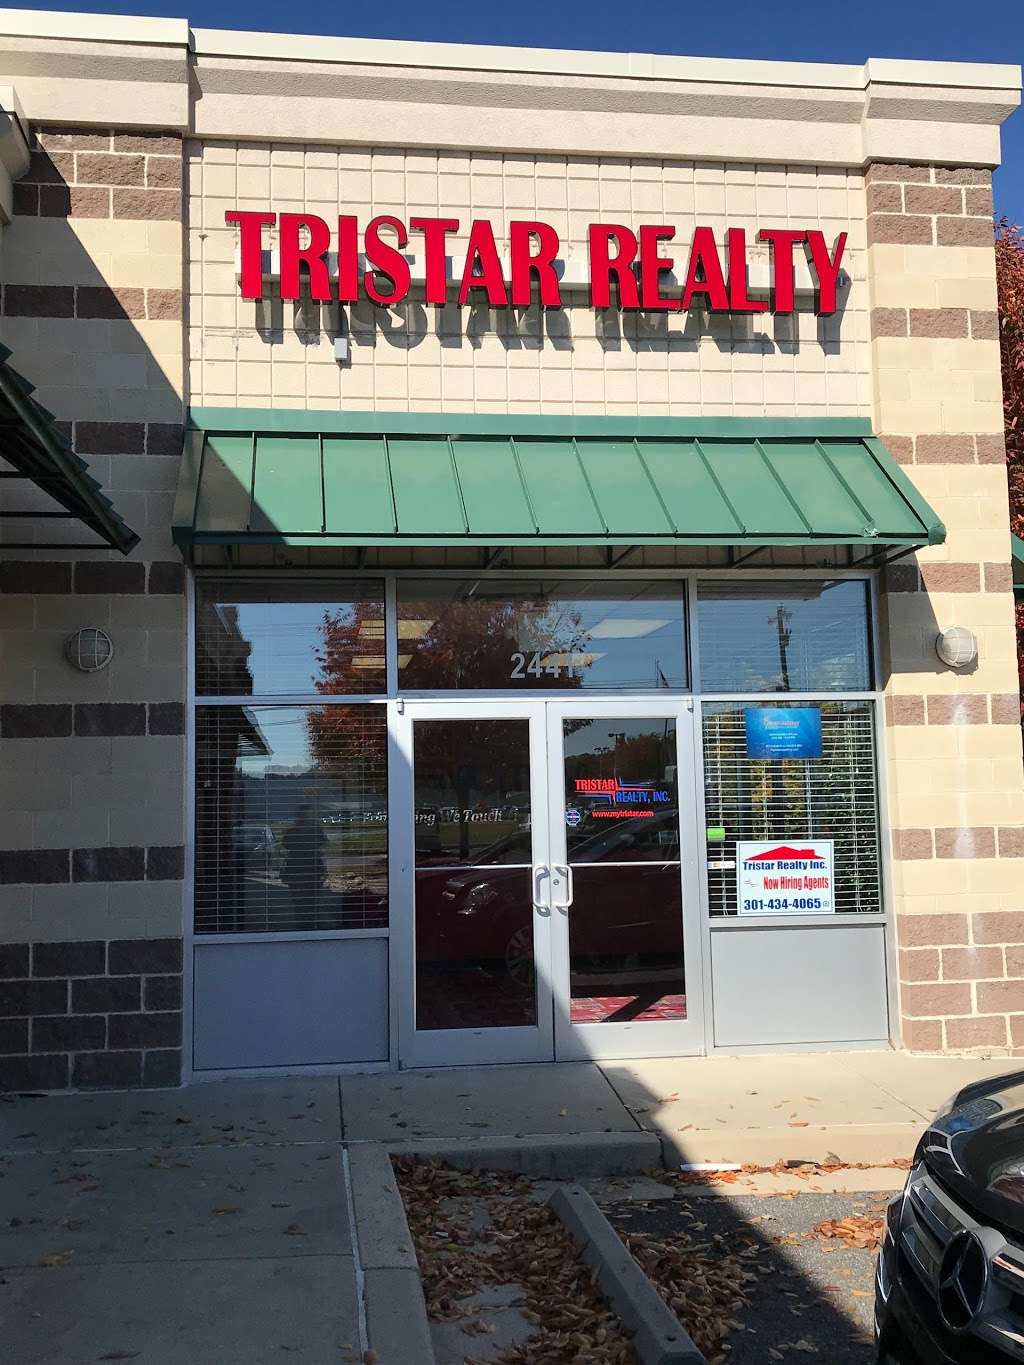 Tristar Realty, Inc | 2441 Crain Hwy, Waldorf, MD 20601 | Phone: (301) 358-6038